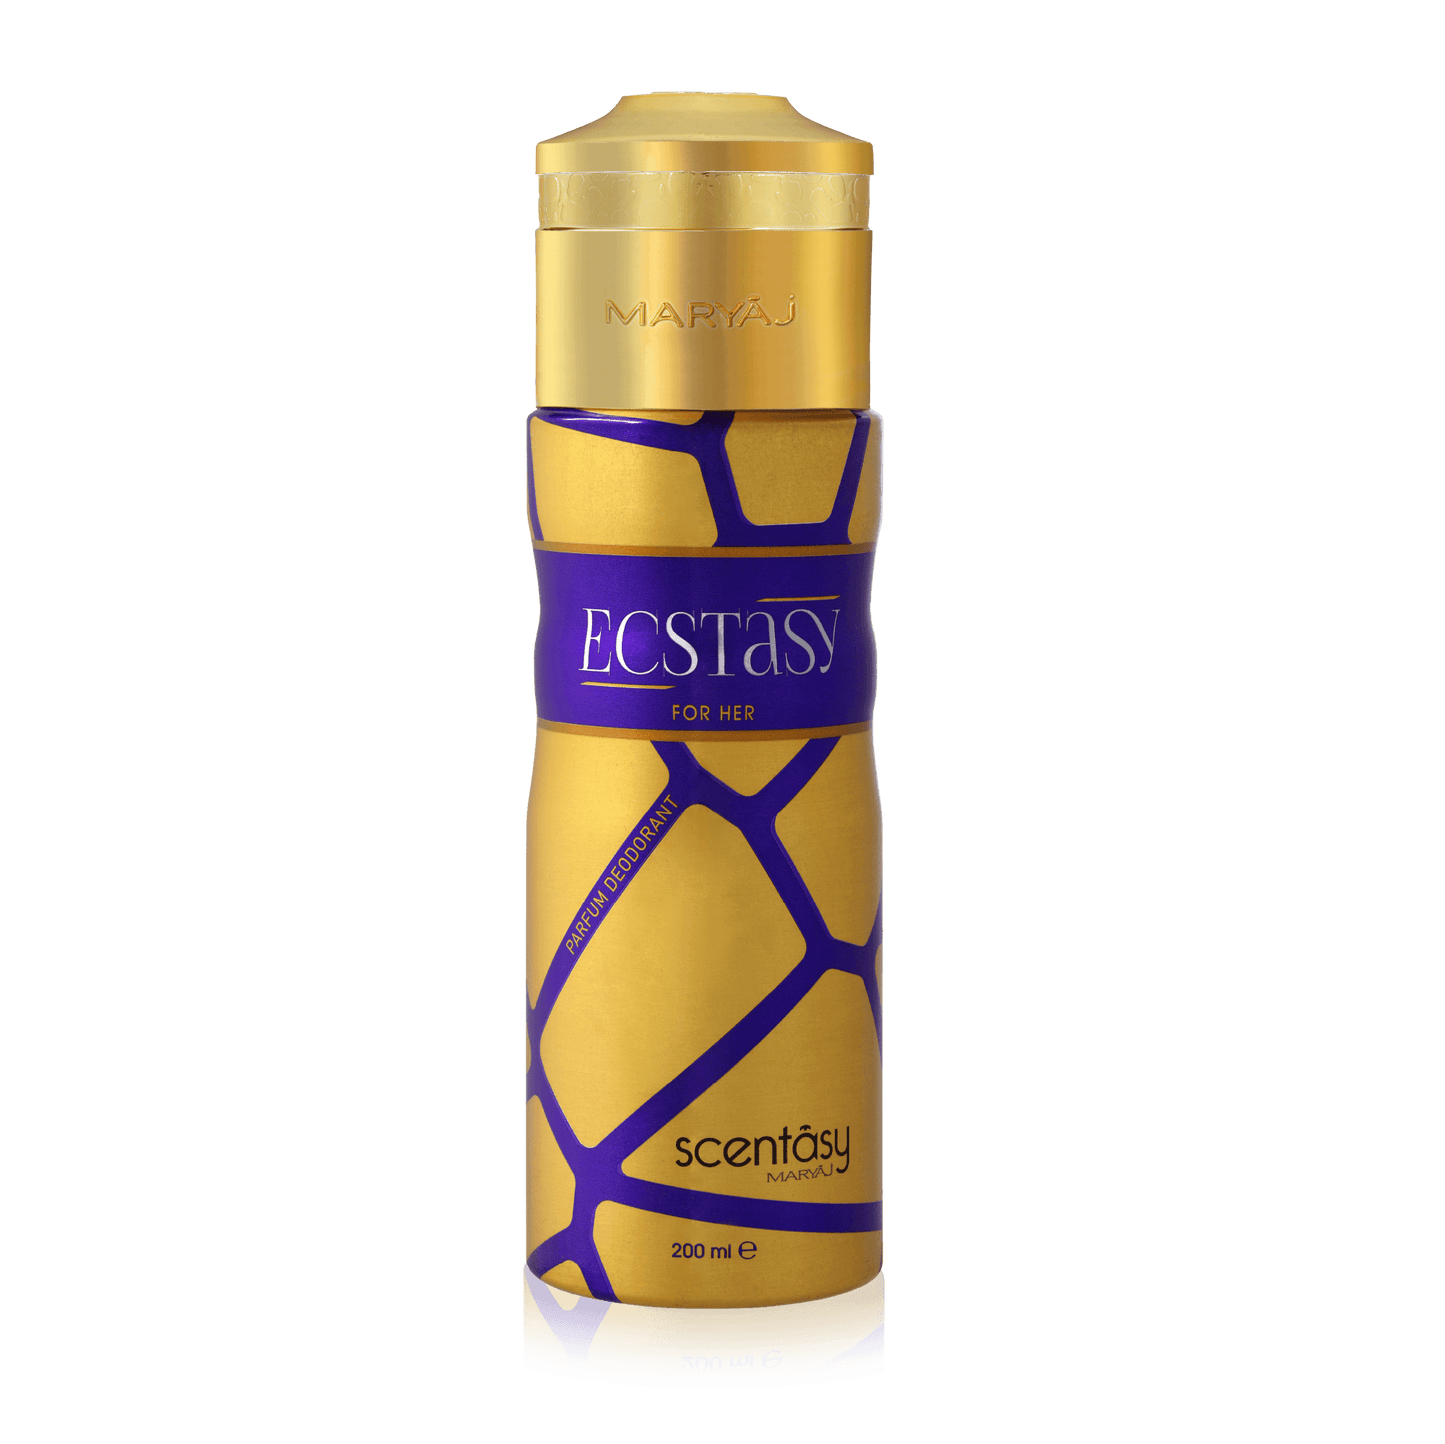 Czarina Perfume Gift Set for Women (Eau de Parfum Spray 100ml + Breeze Perfume Body Spray 200ml)